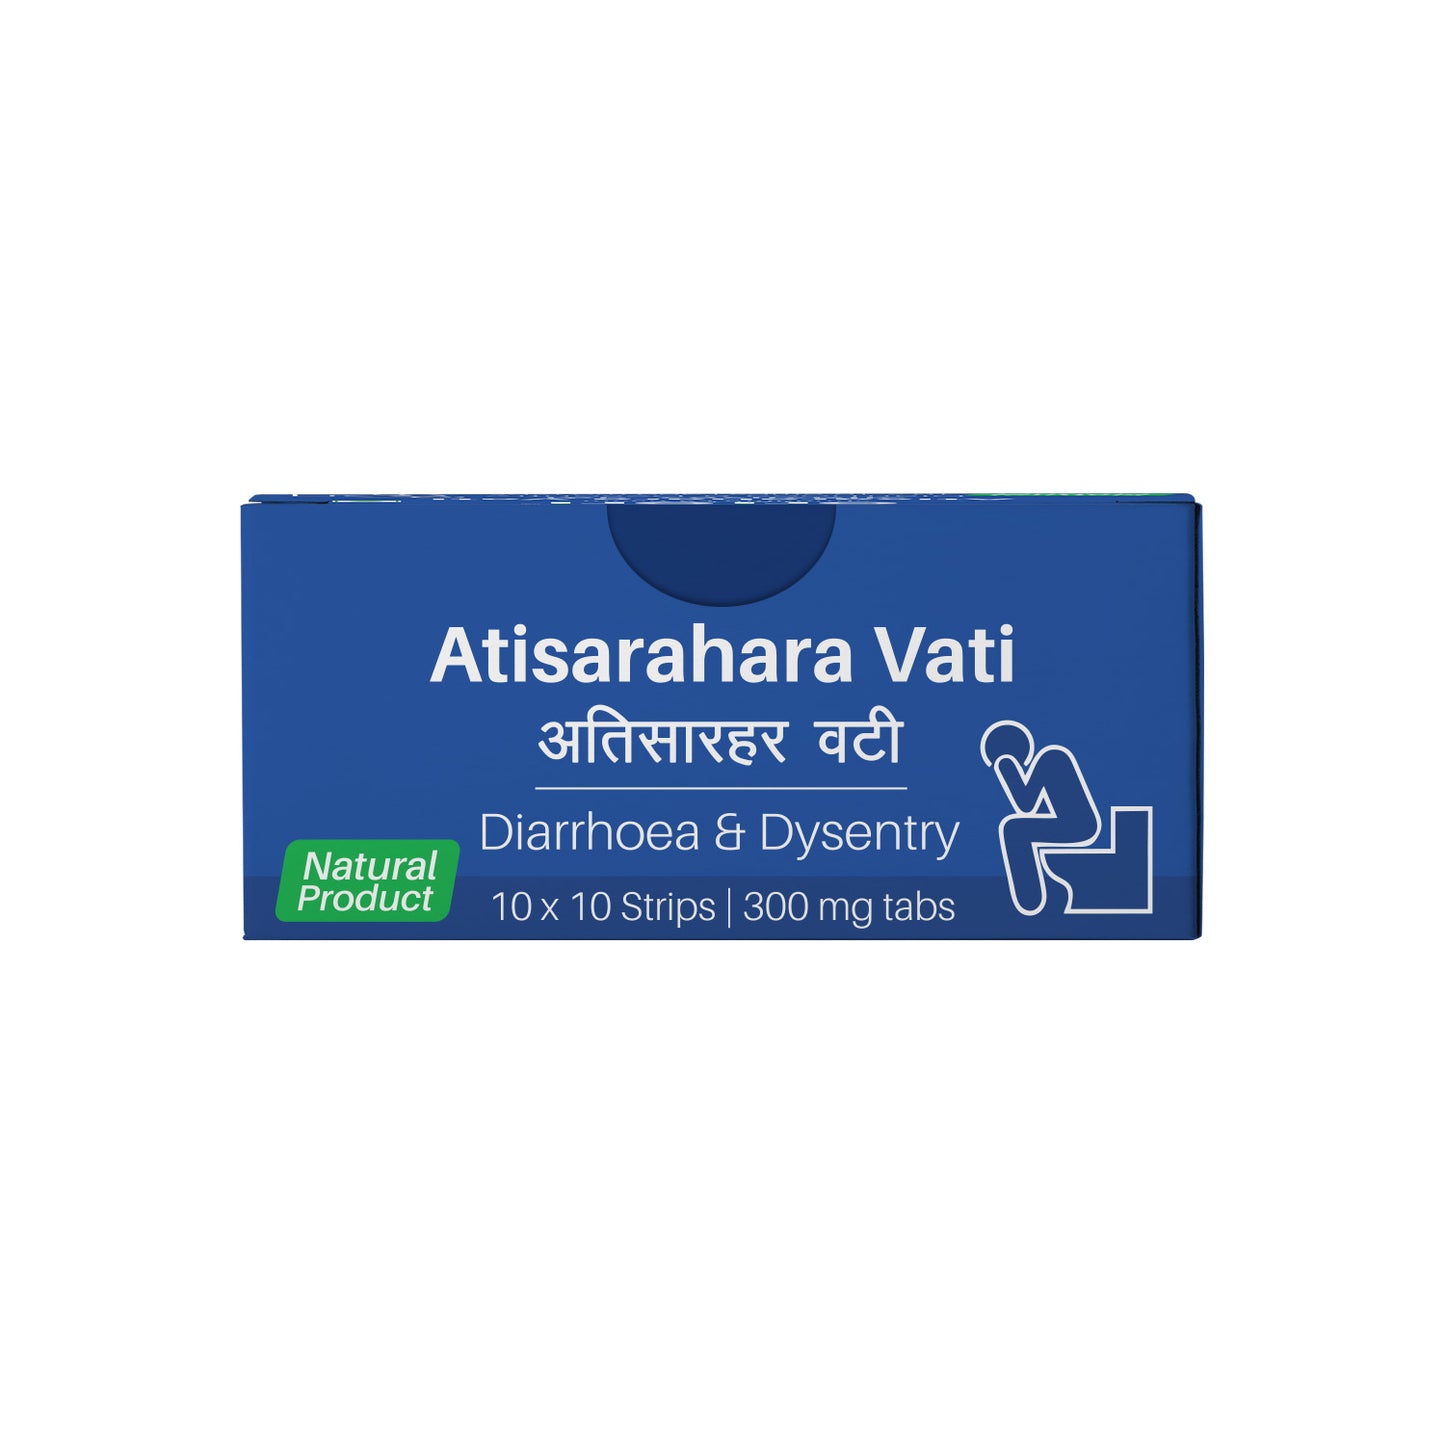 Atisarahara Vati - Diarrhoea & Dysentry, 300mg